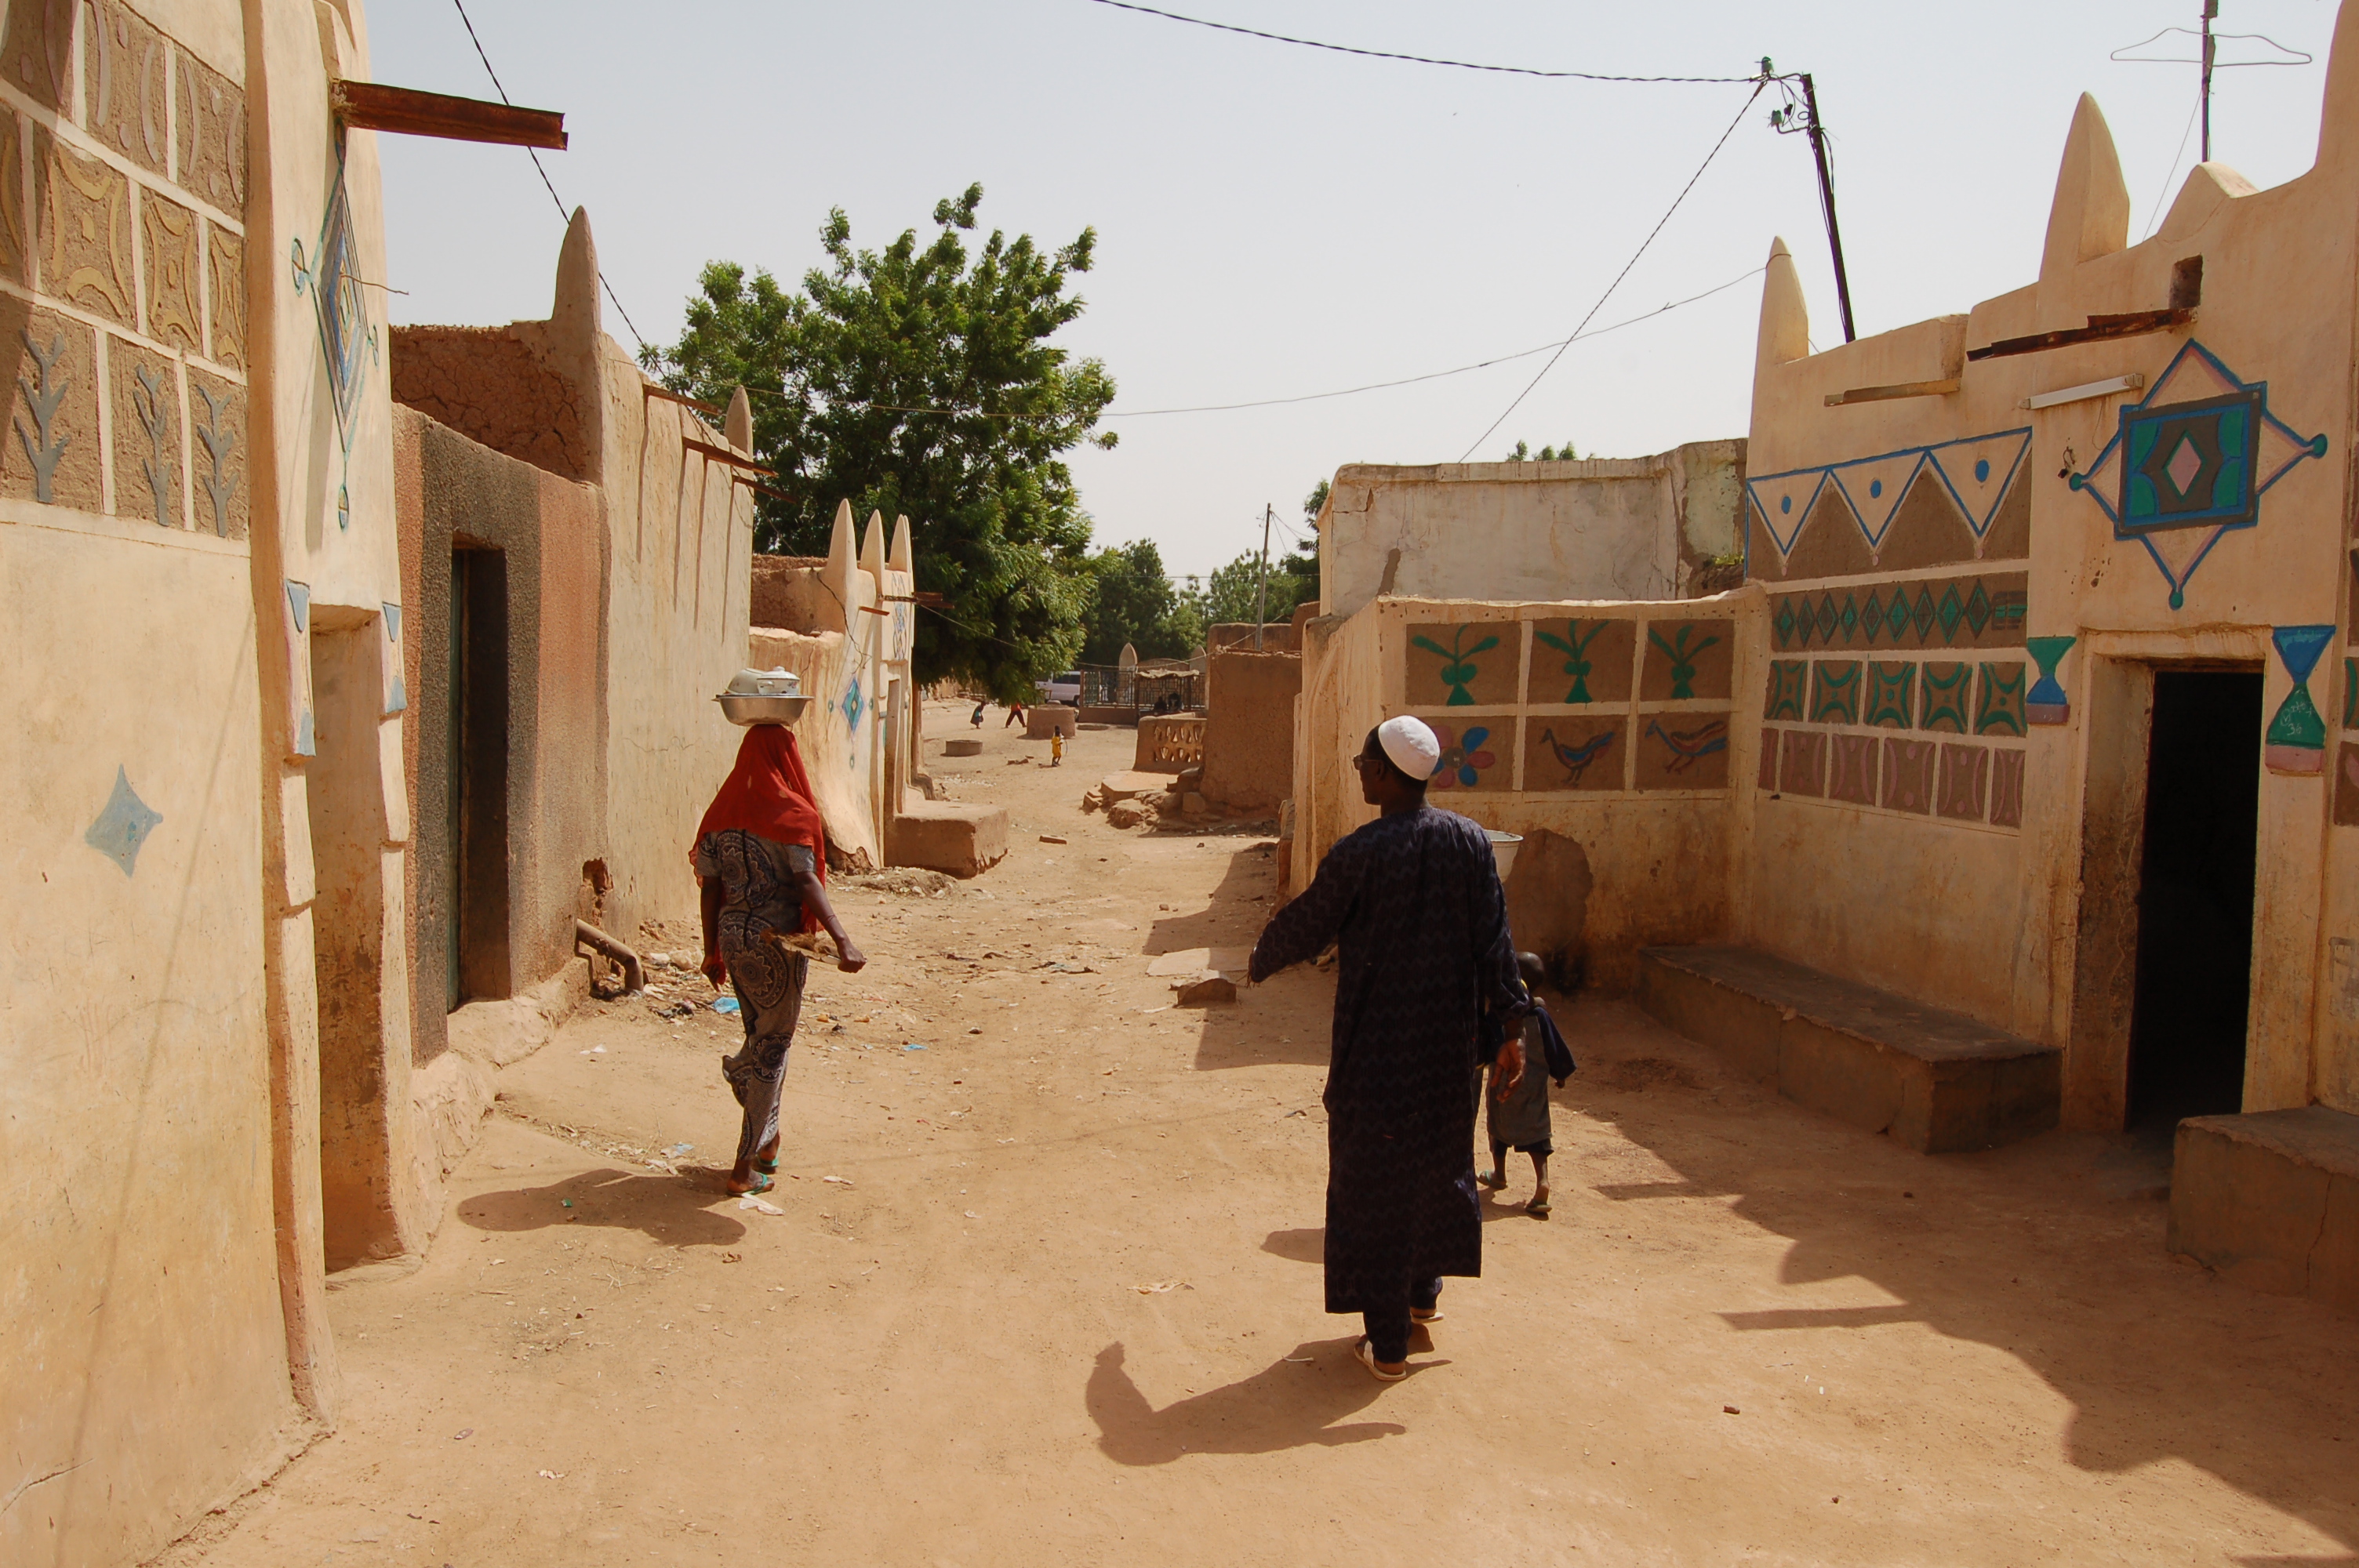 Zinder_Old_Town_Niger_2007.jpg